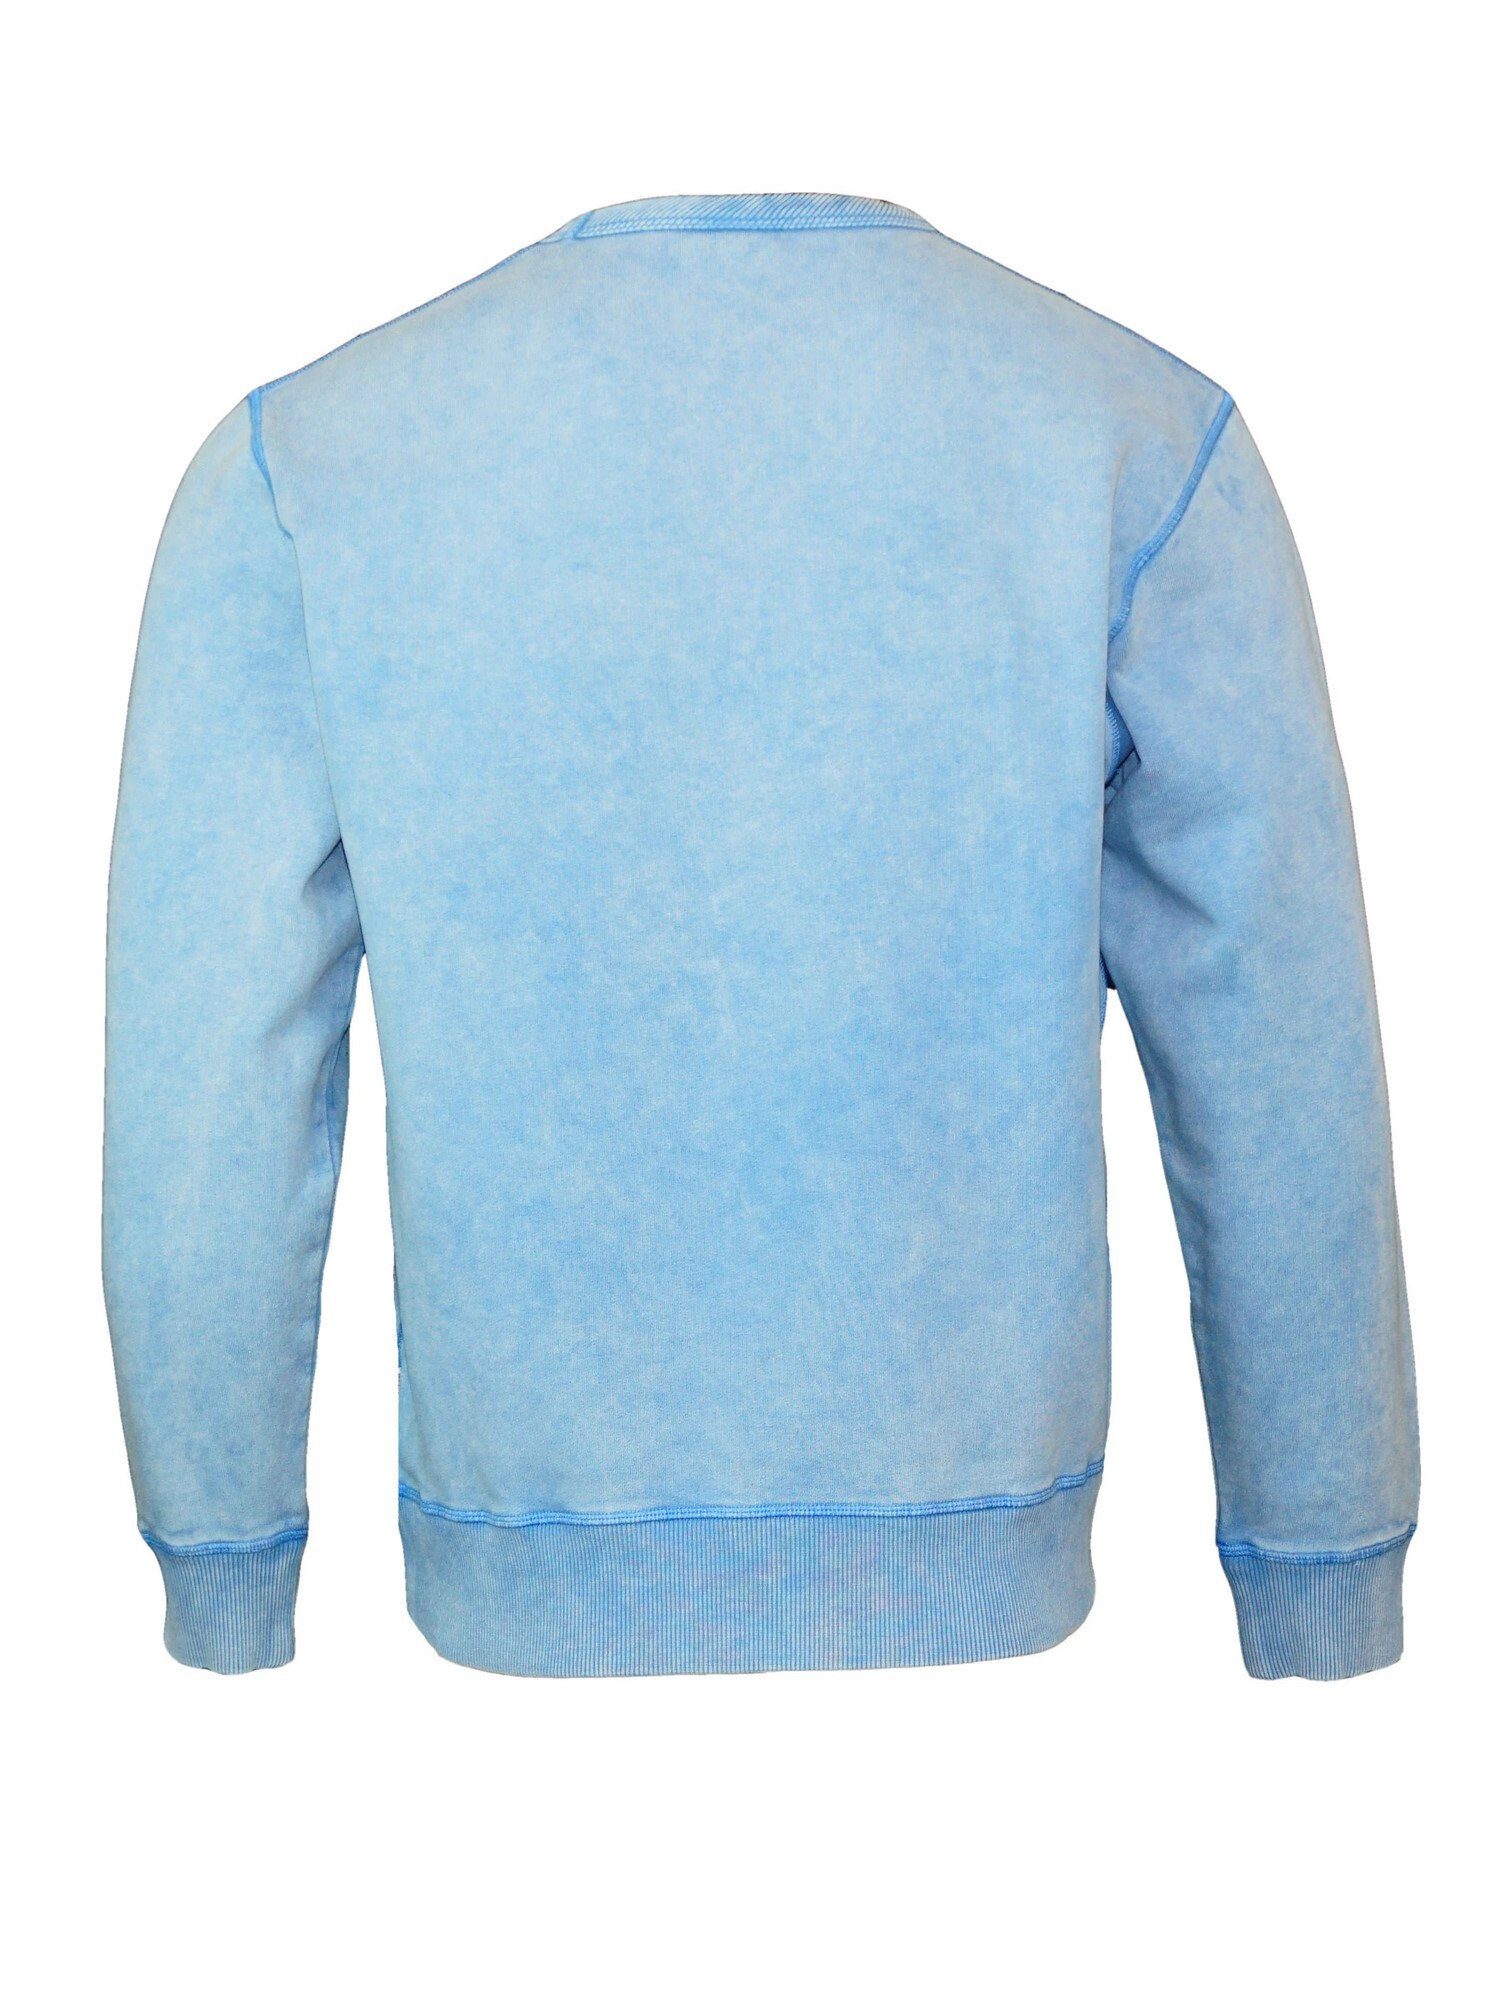 WASH Pullover COTTON Sweatshirt & BRUSHED Sweatshirt ACID Franklin Marshall